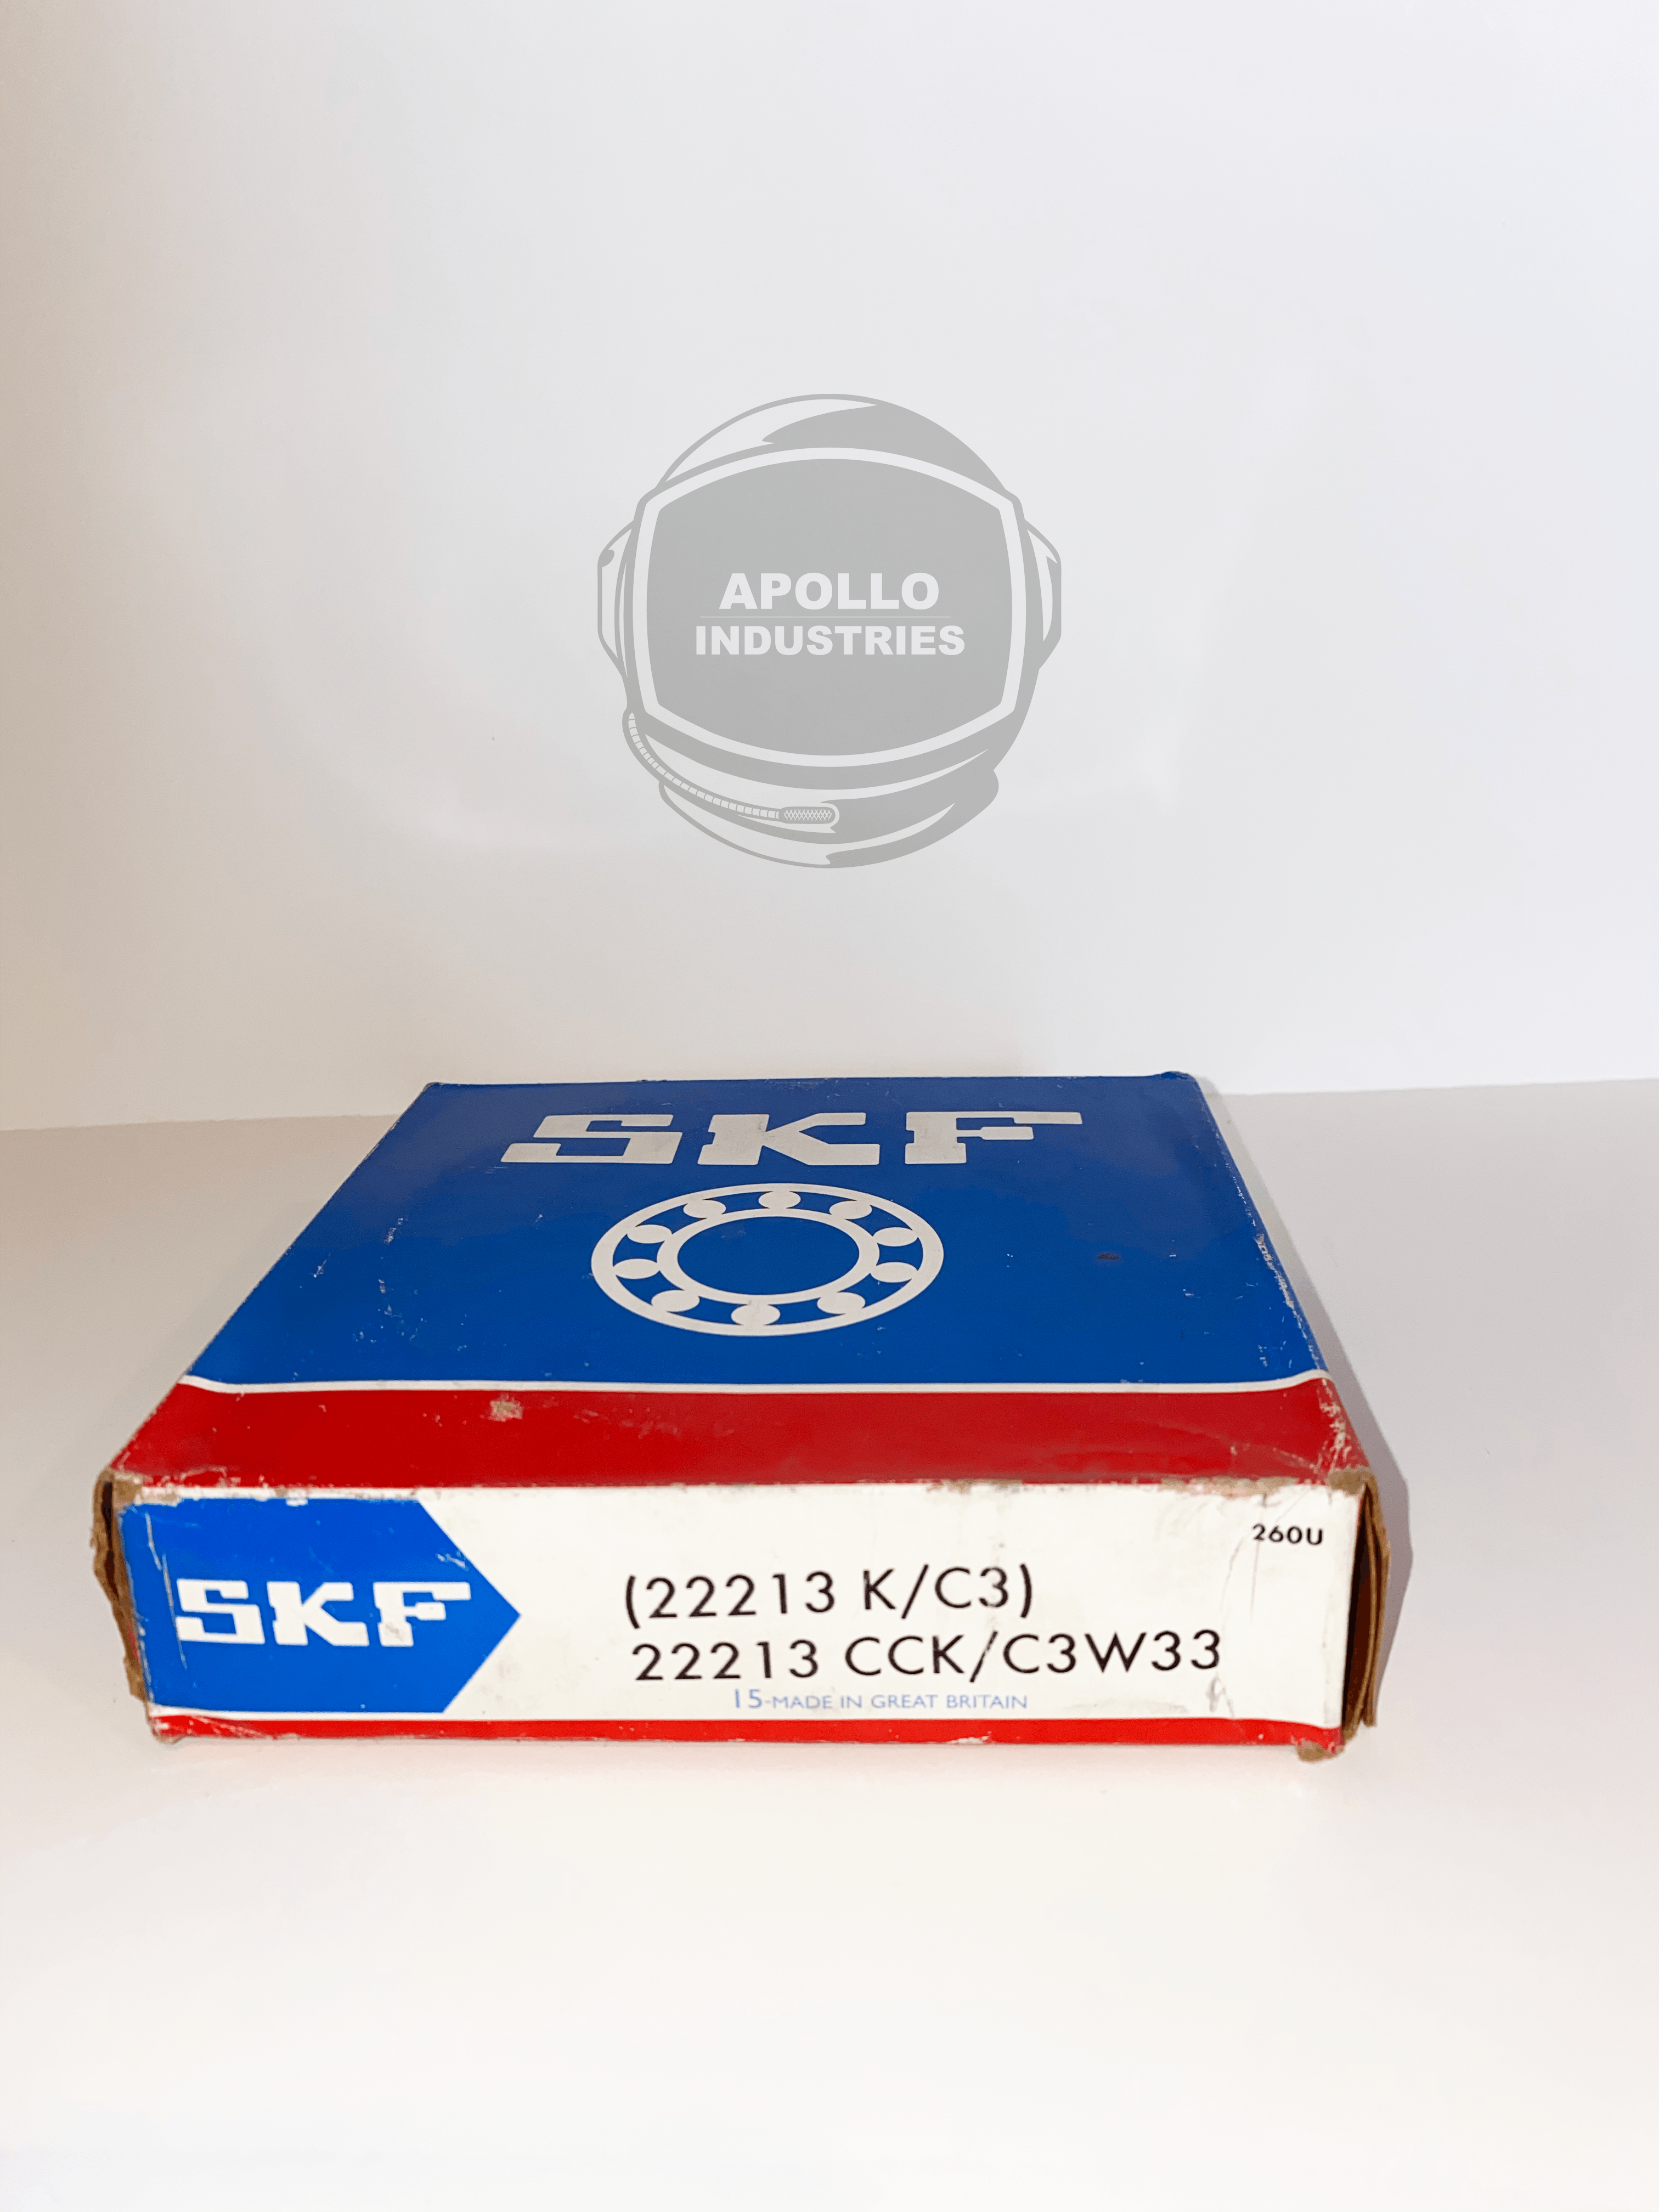 SKF Spherical roller bearing 22213CCK/C3W33 - Apollo Industries llc